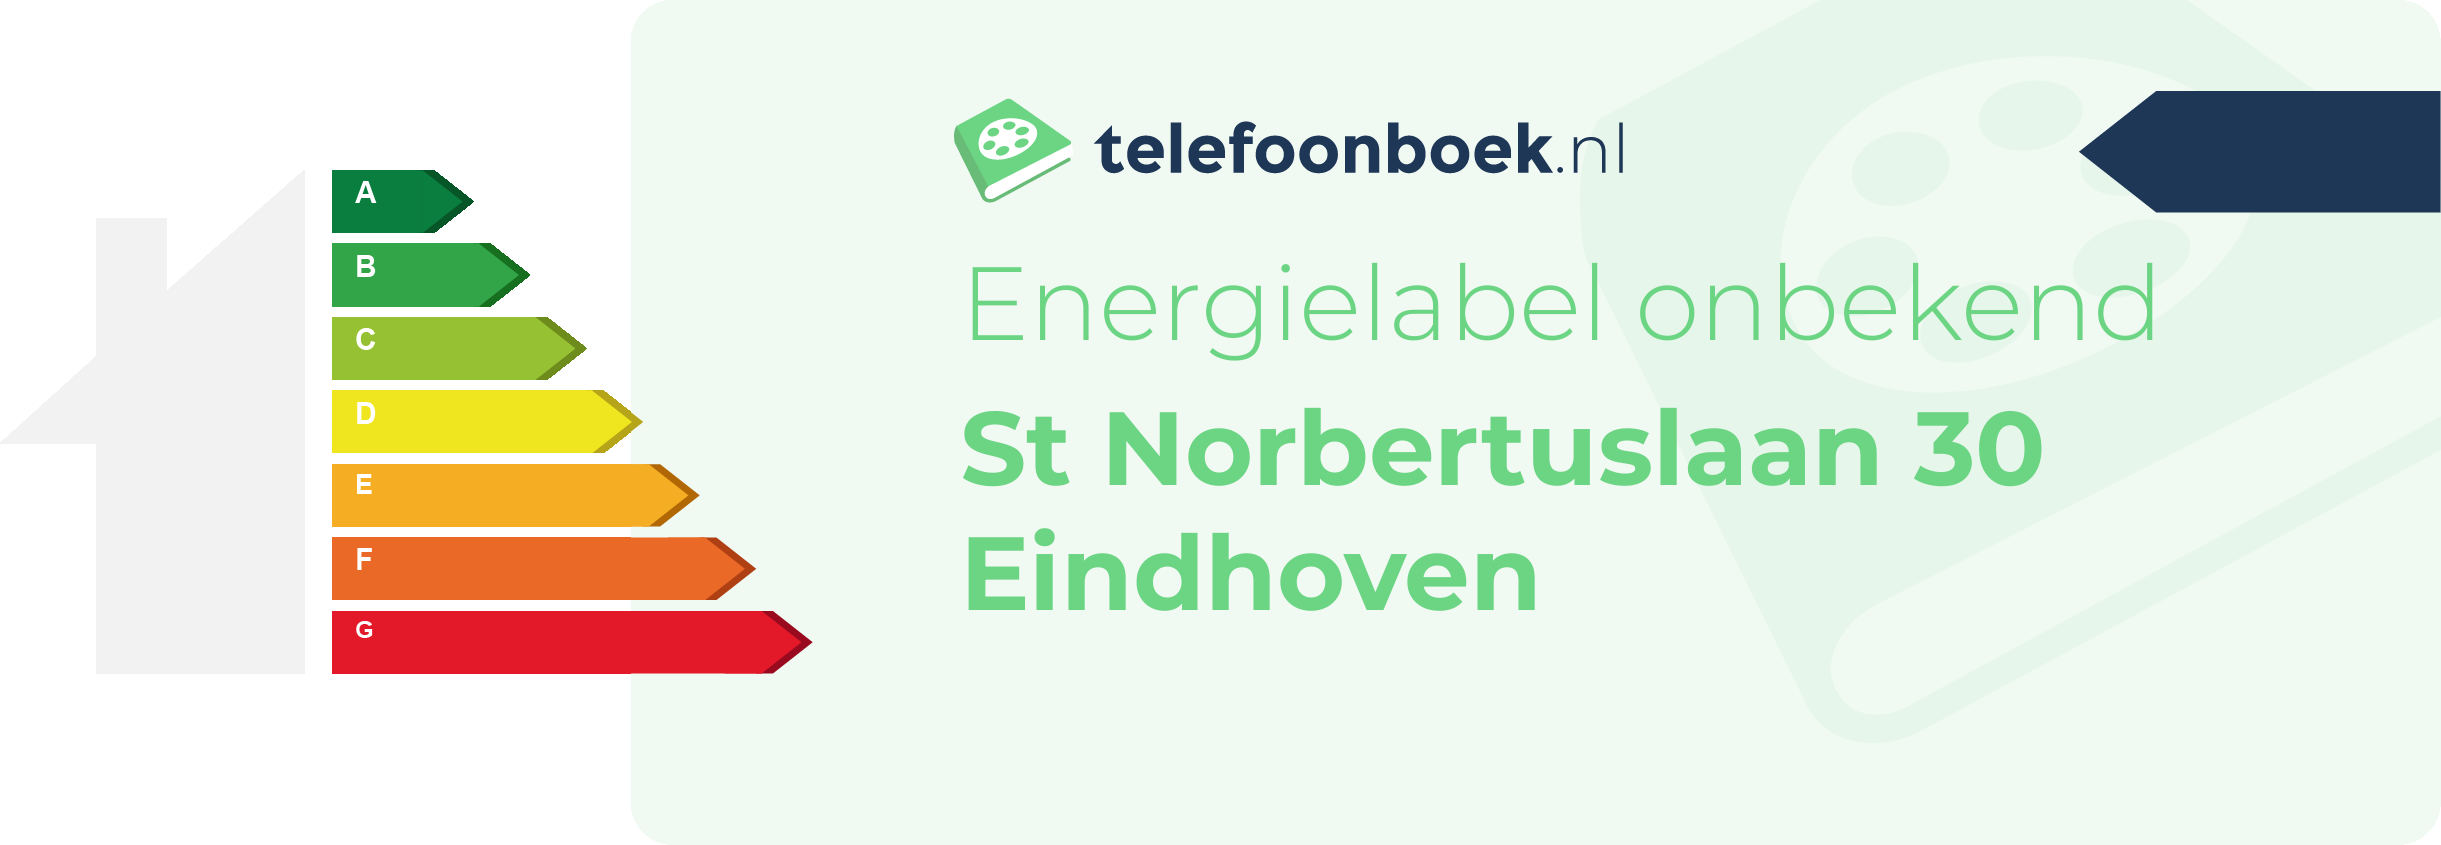 Energielabel St Norbertuslaan 30 Eindhoven